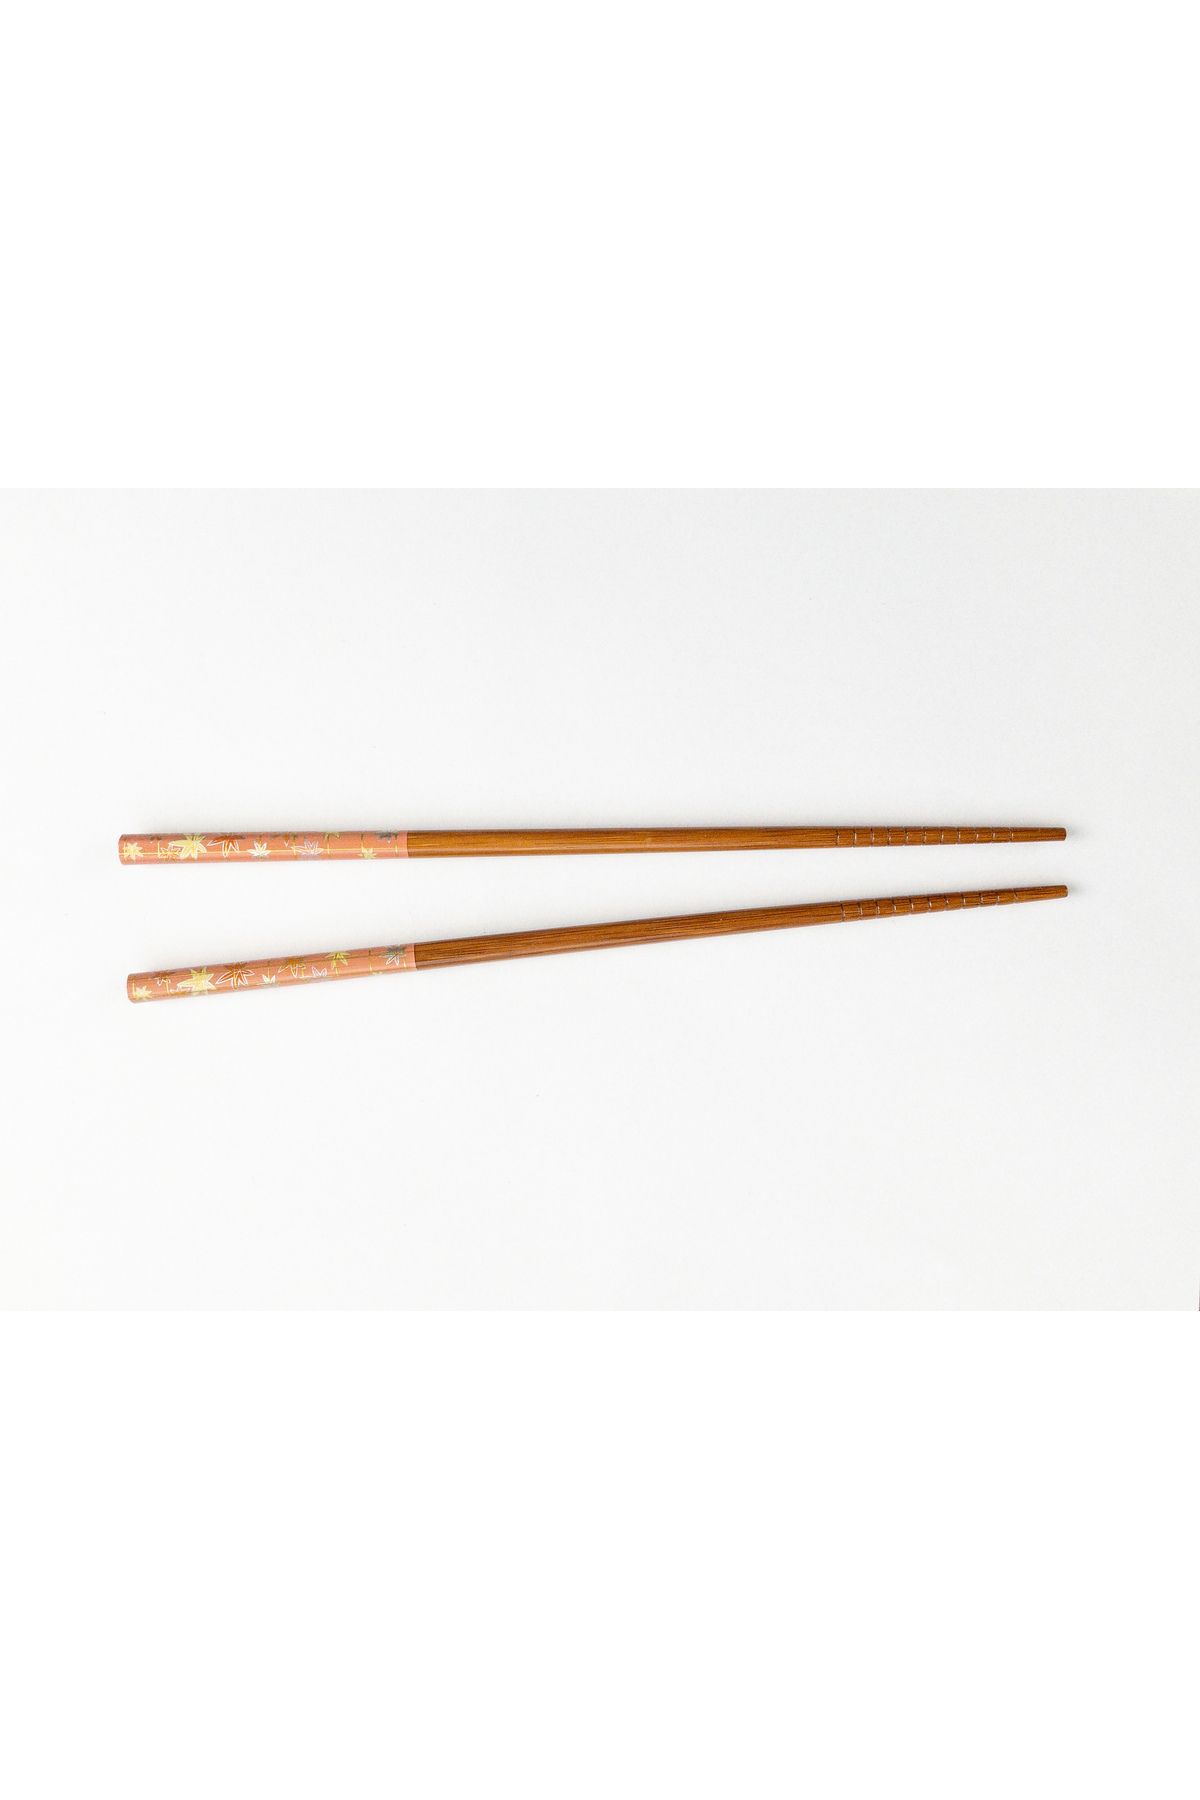 Mnk Chopstick  resimli, abanoz ağacı sushi/noodle çubuğu.